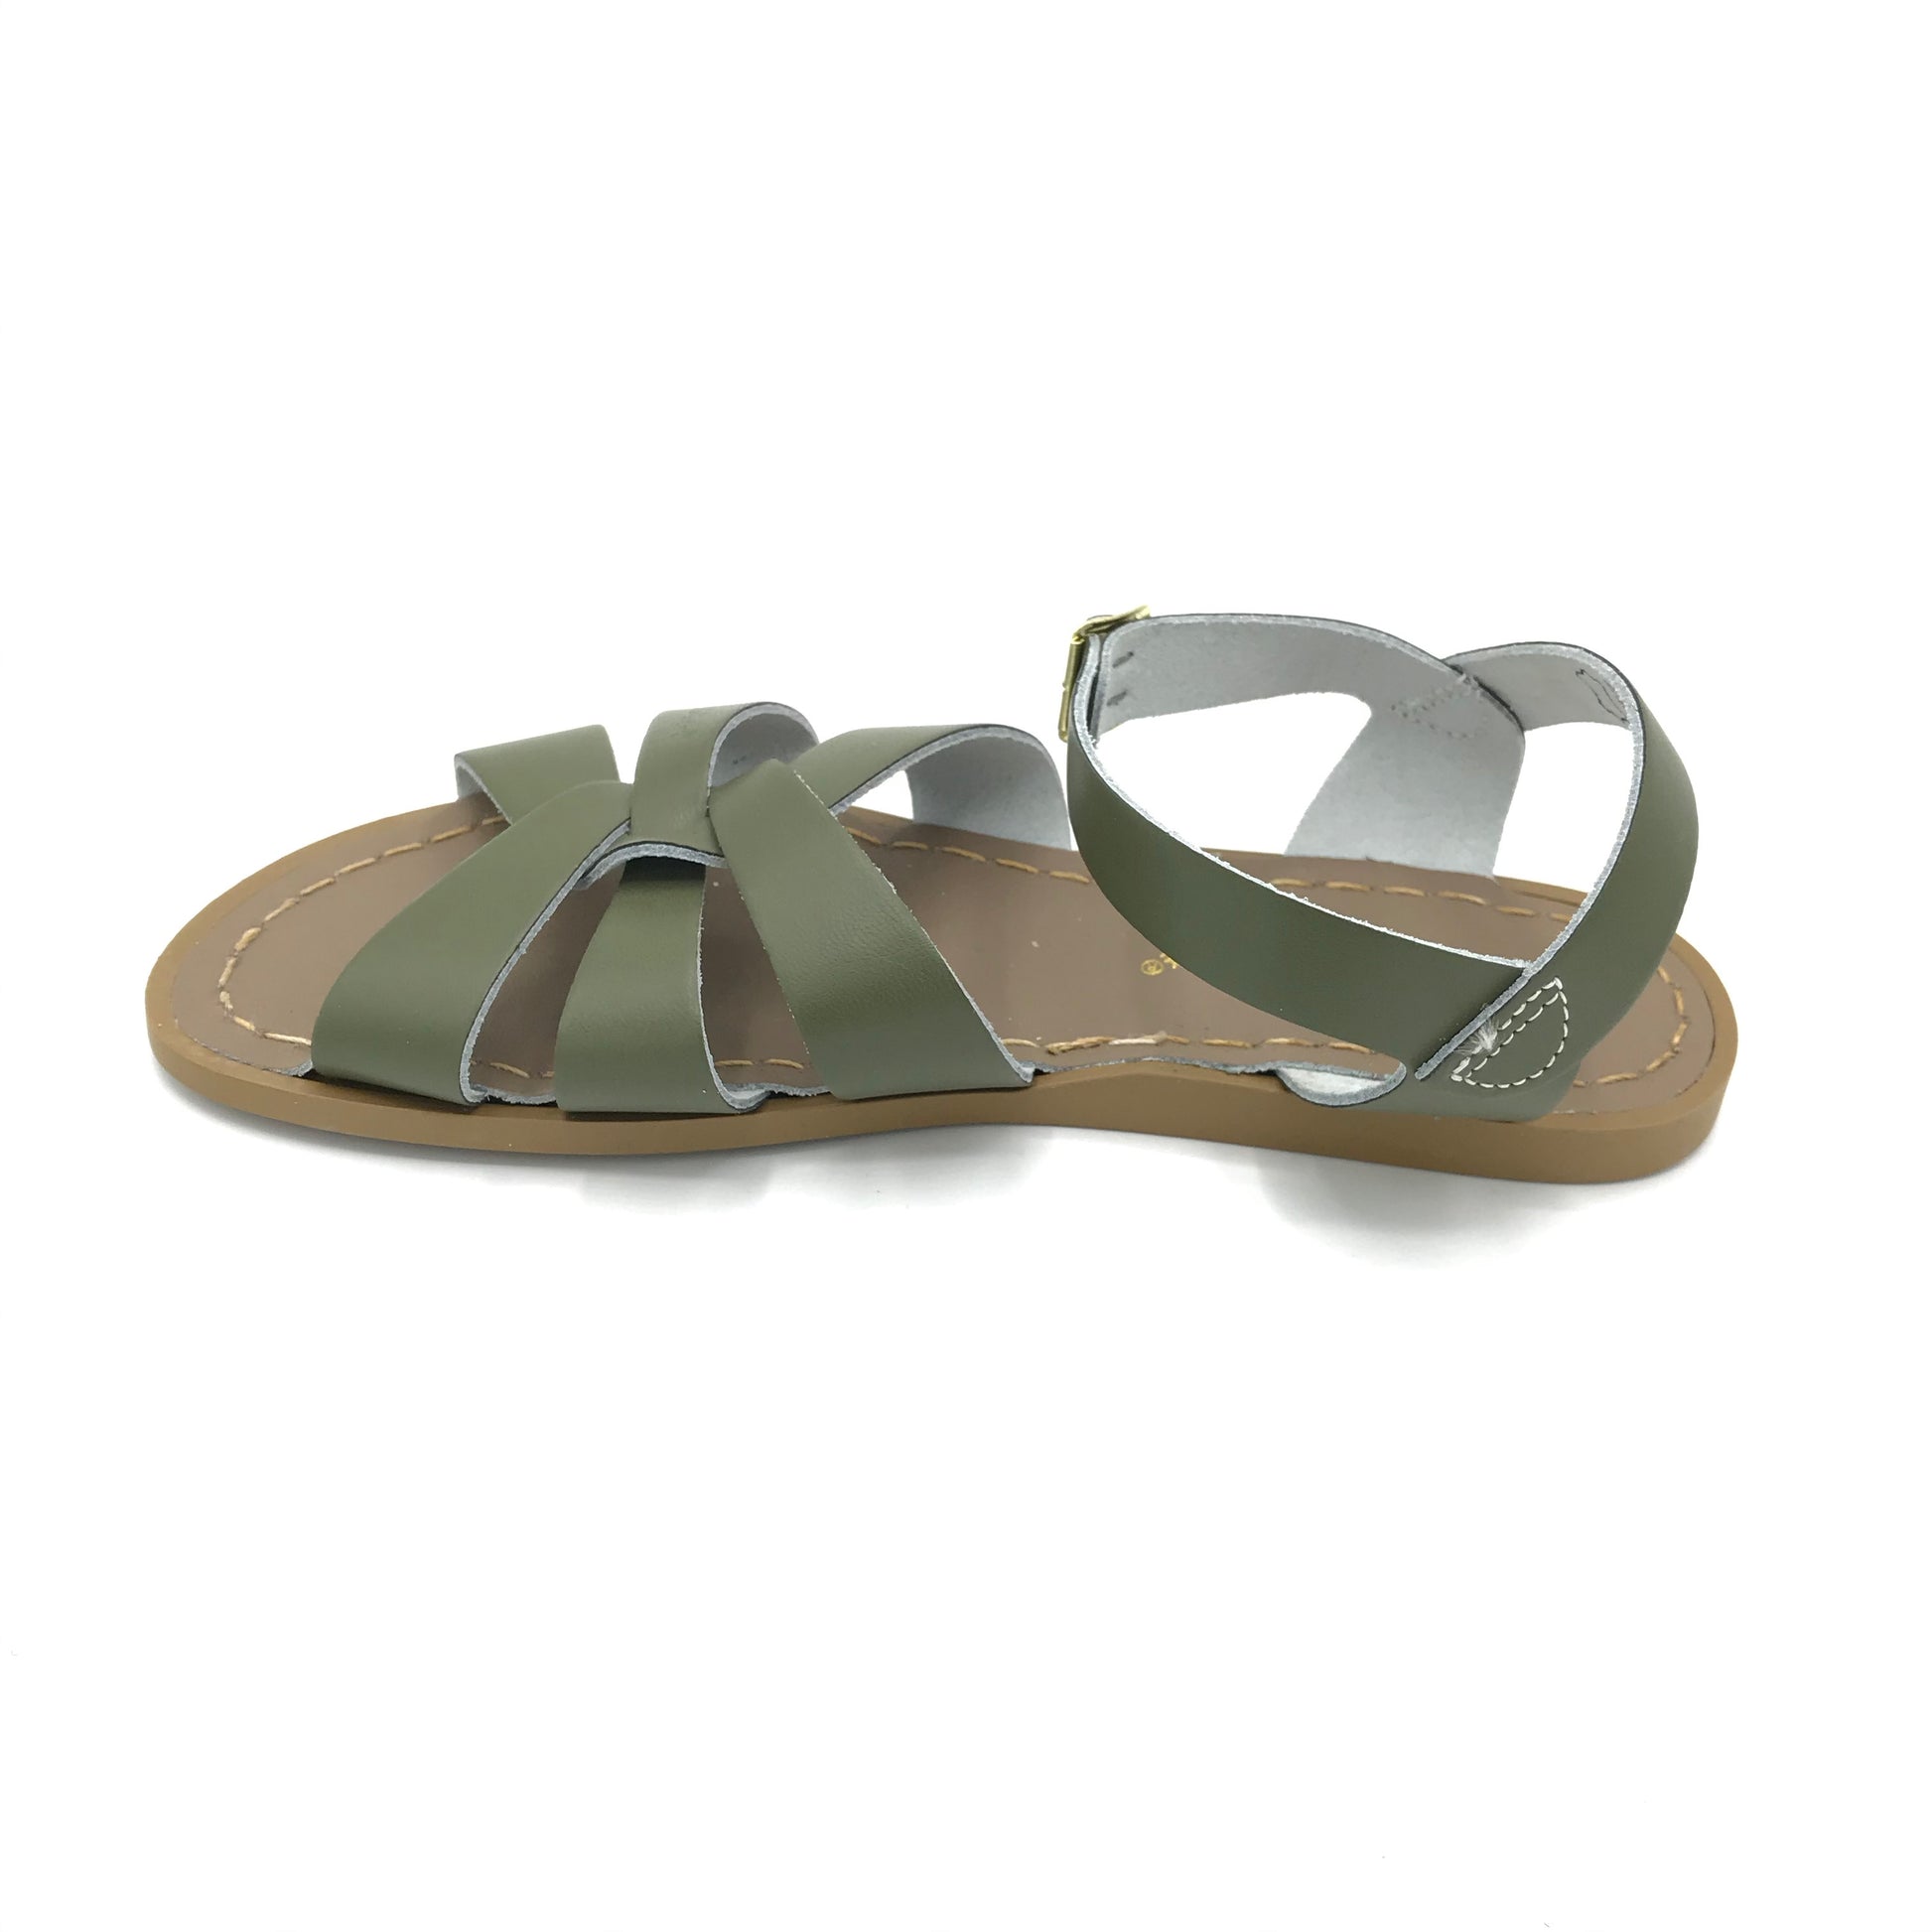 Olive Original Sandals - Imeldas Shoes Norwich